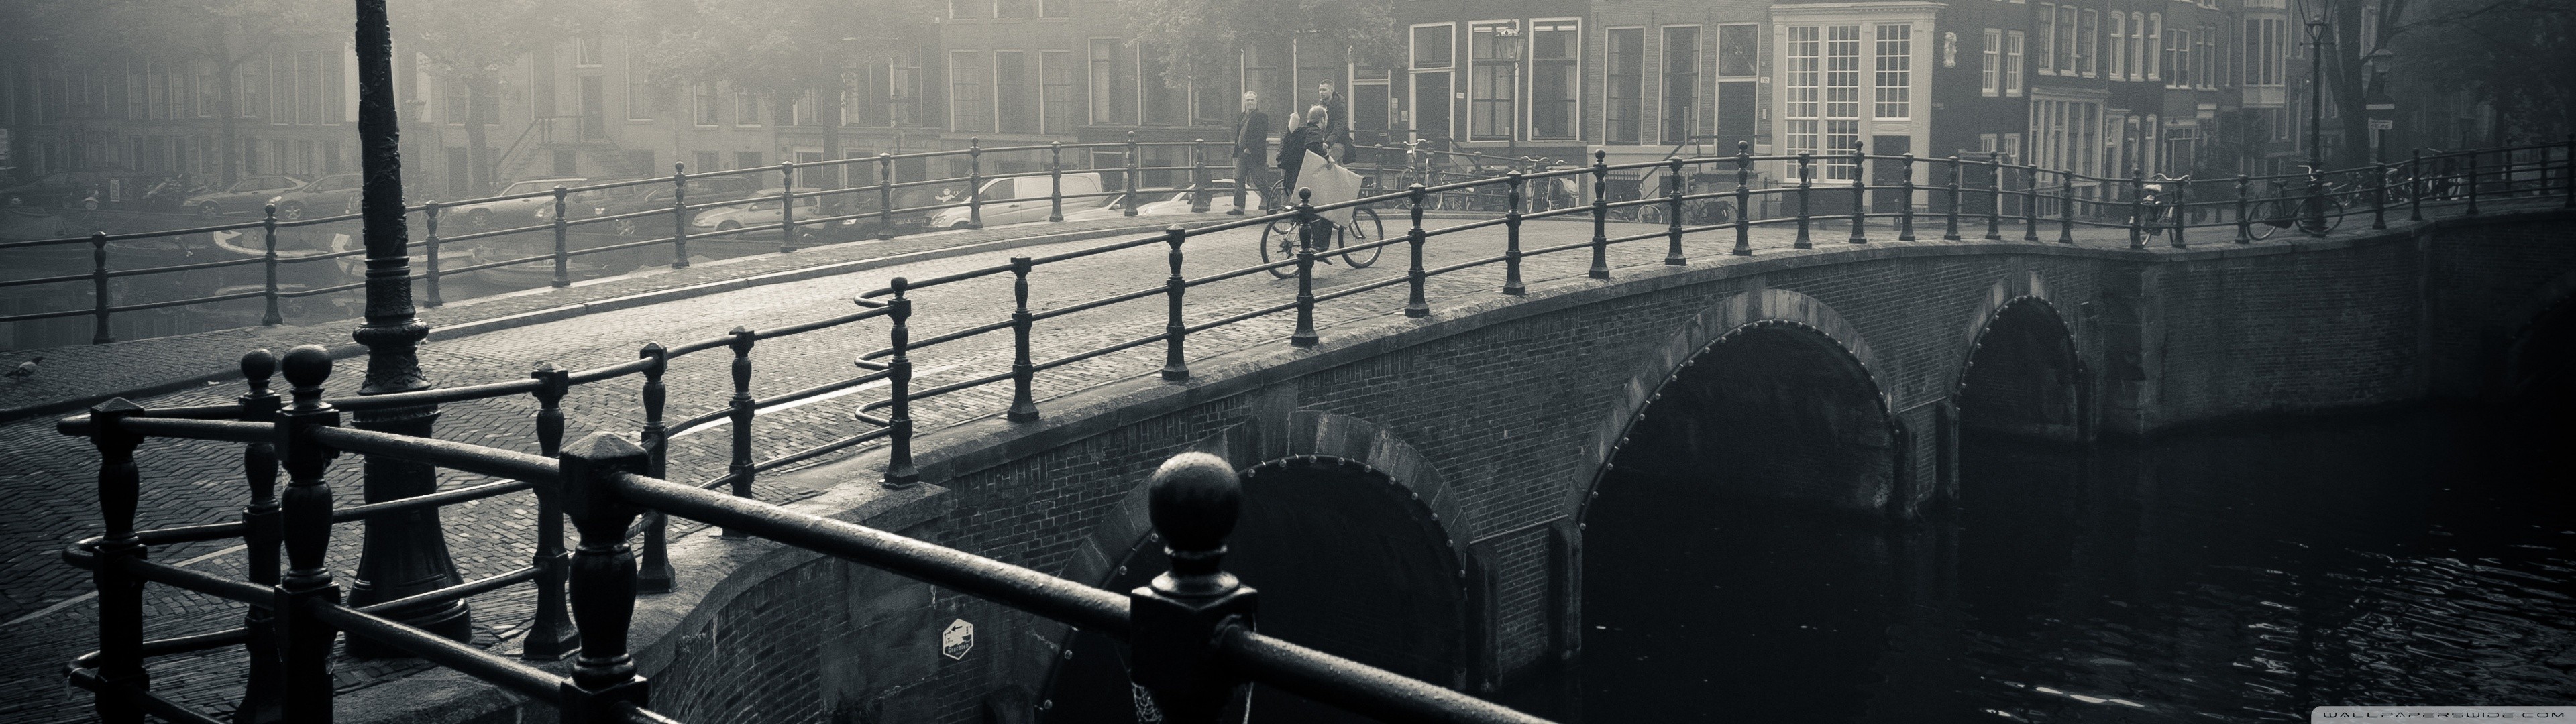 General 3840x1080 multiple display Netherlands monochrome bridge Amsterdam city urban